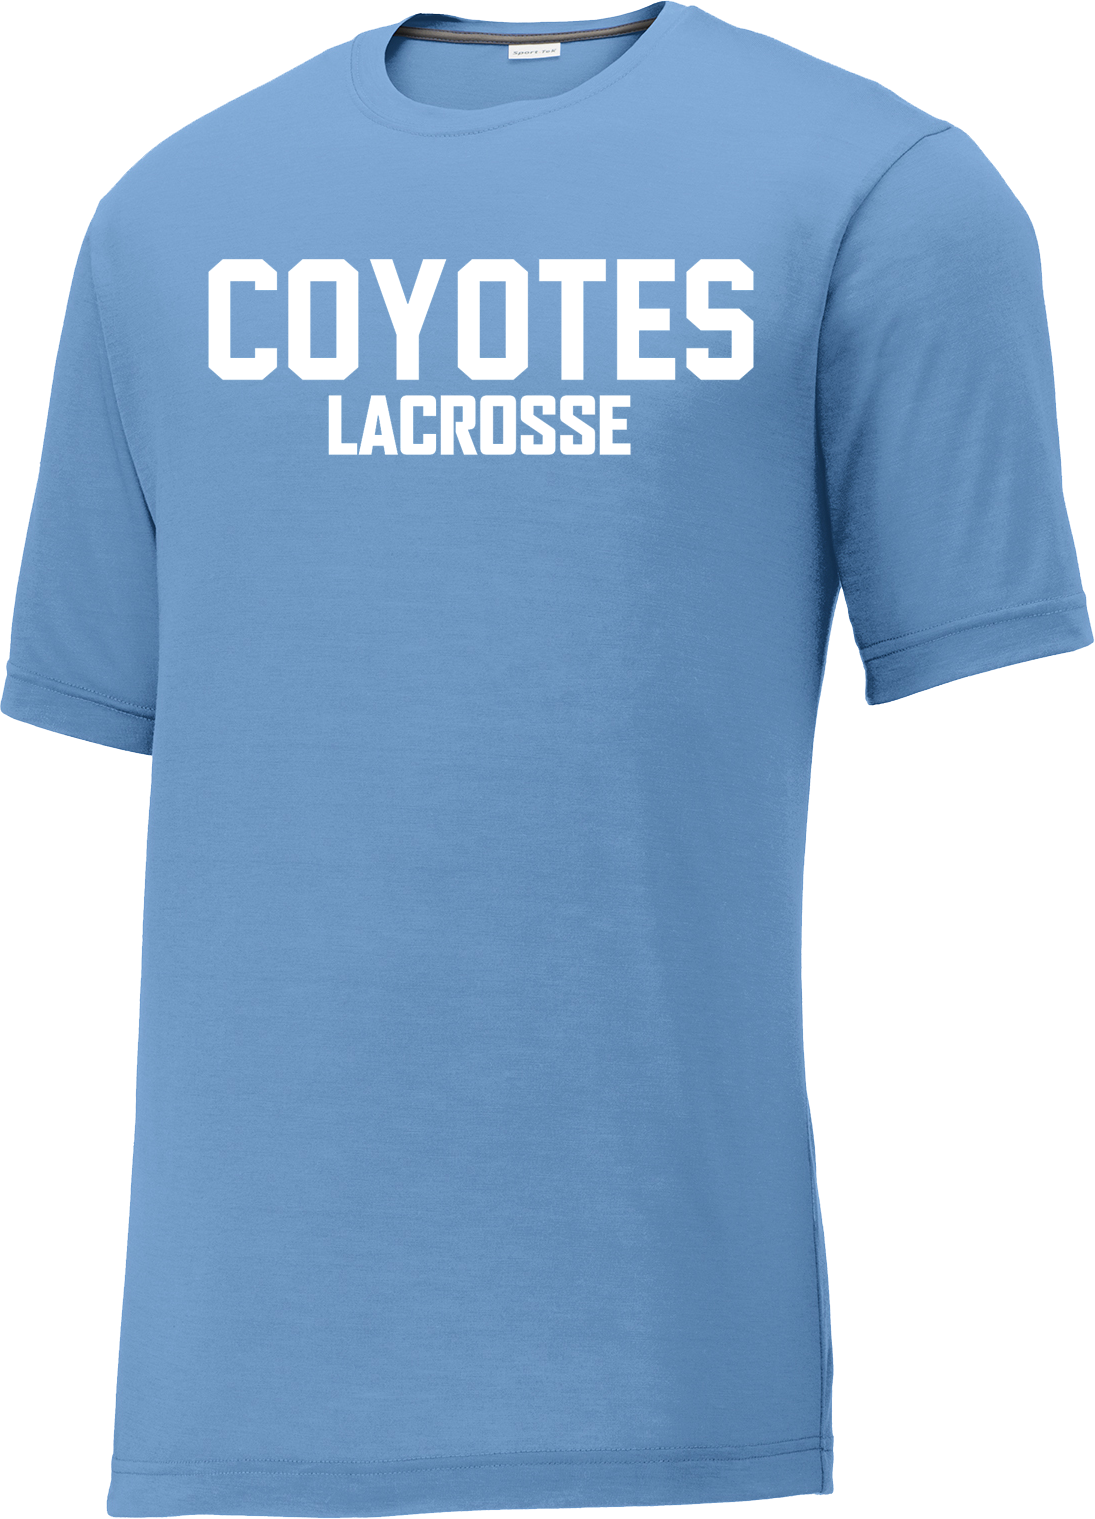 Coyotes Lacrosse Carolina Blue CottonTouch Performance T-Shirt